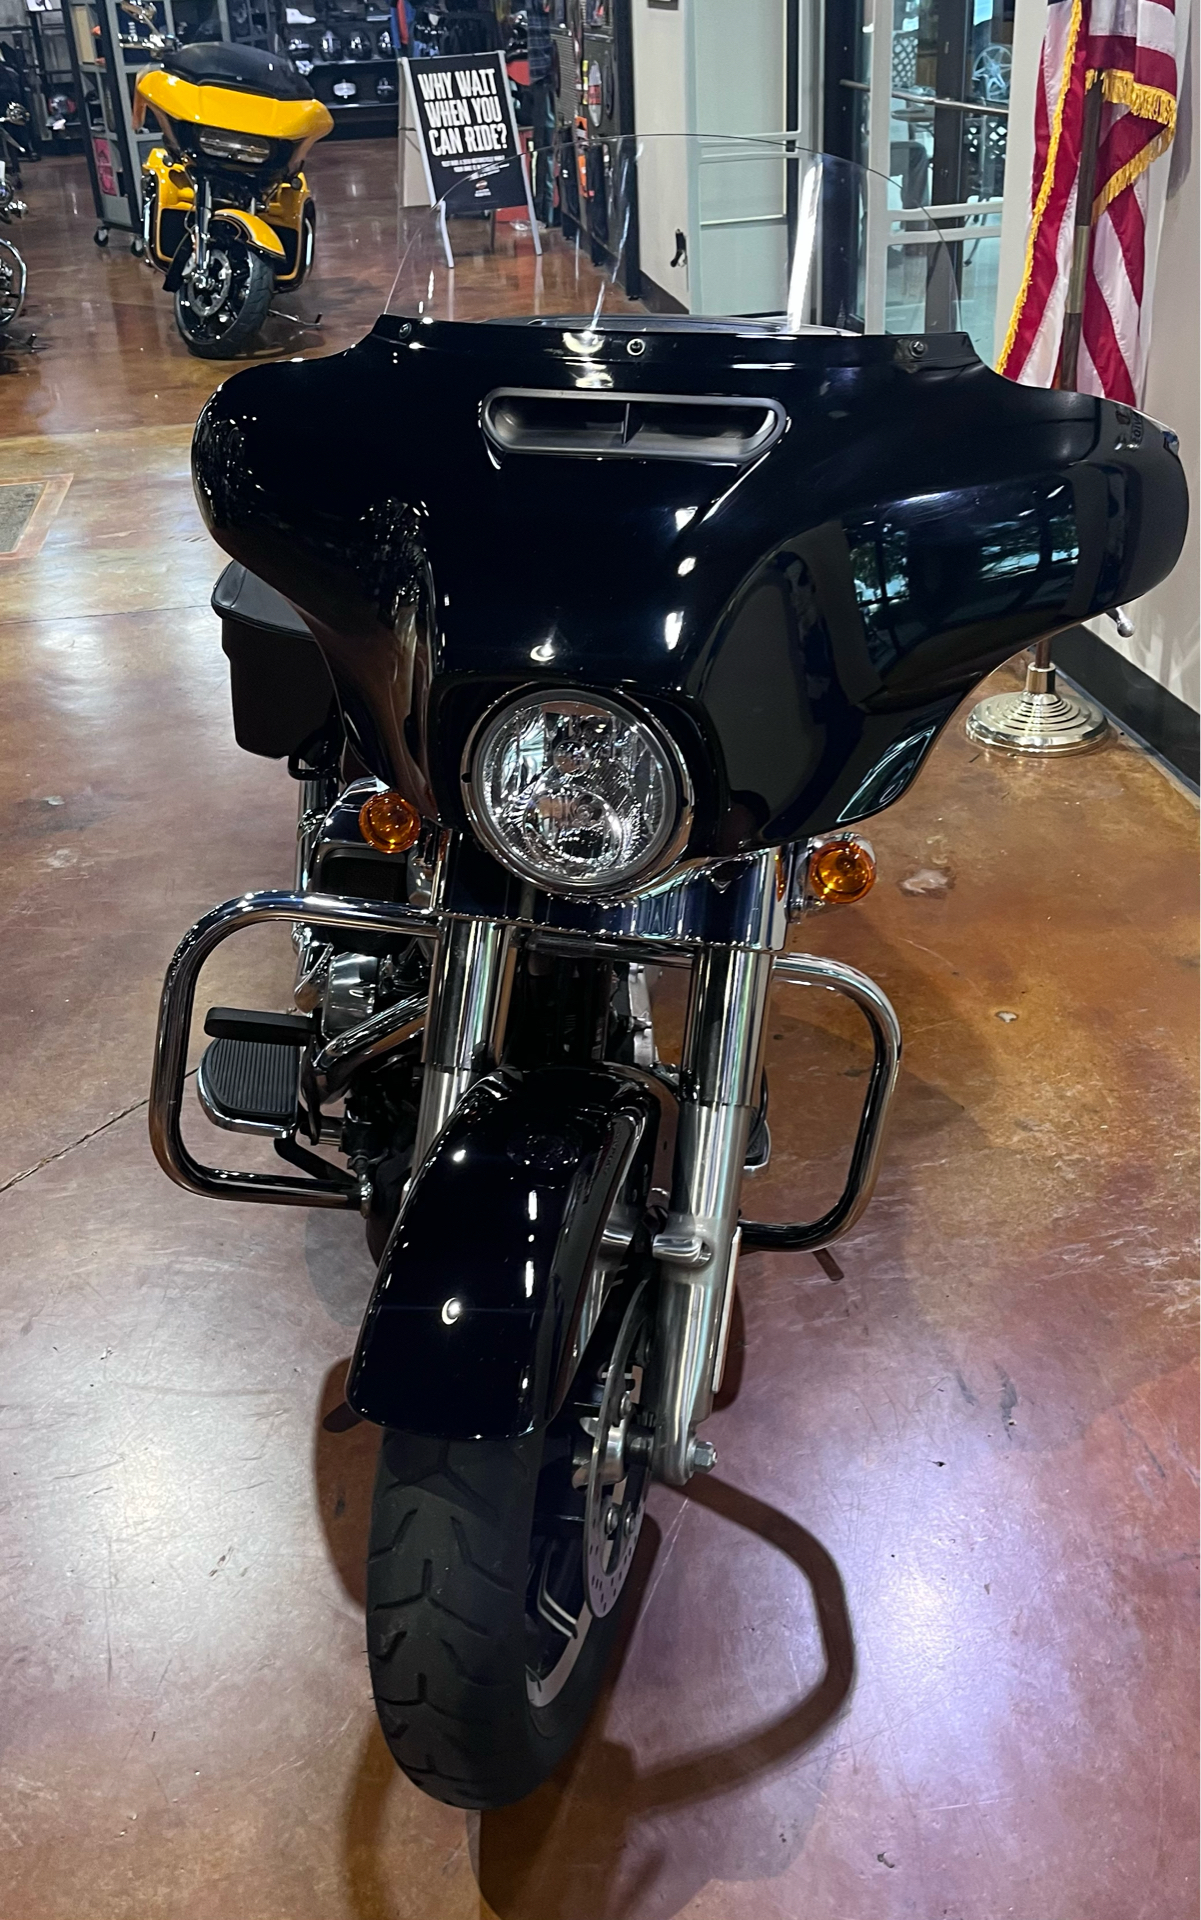 2019 Harley-Davidson Electra Glide near me - Photo 4